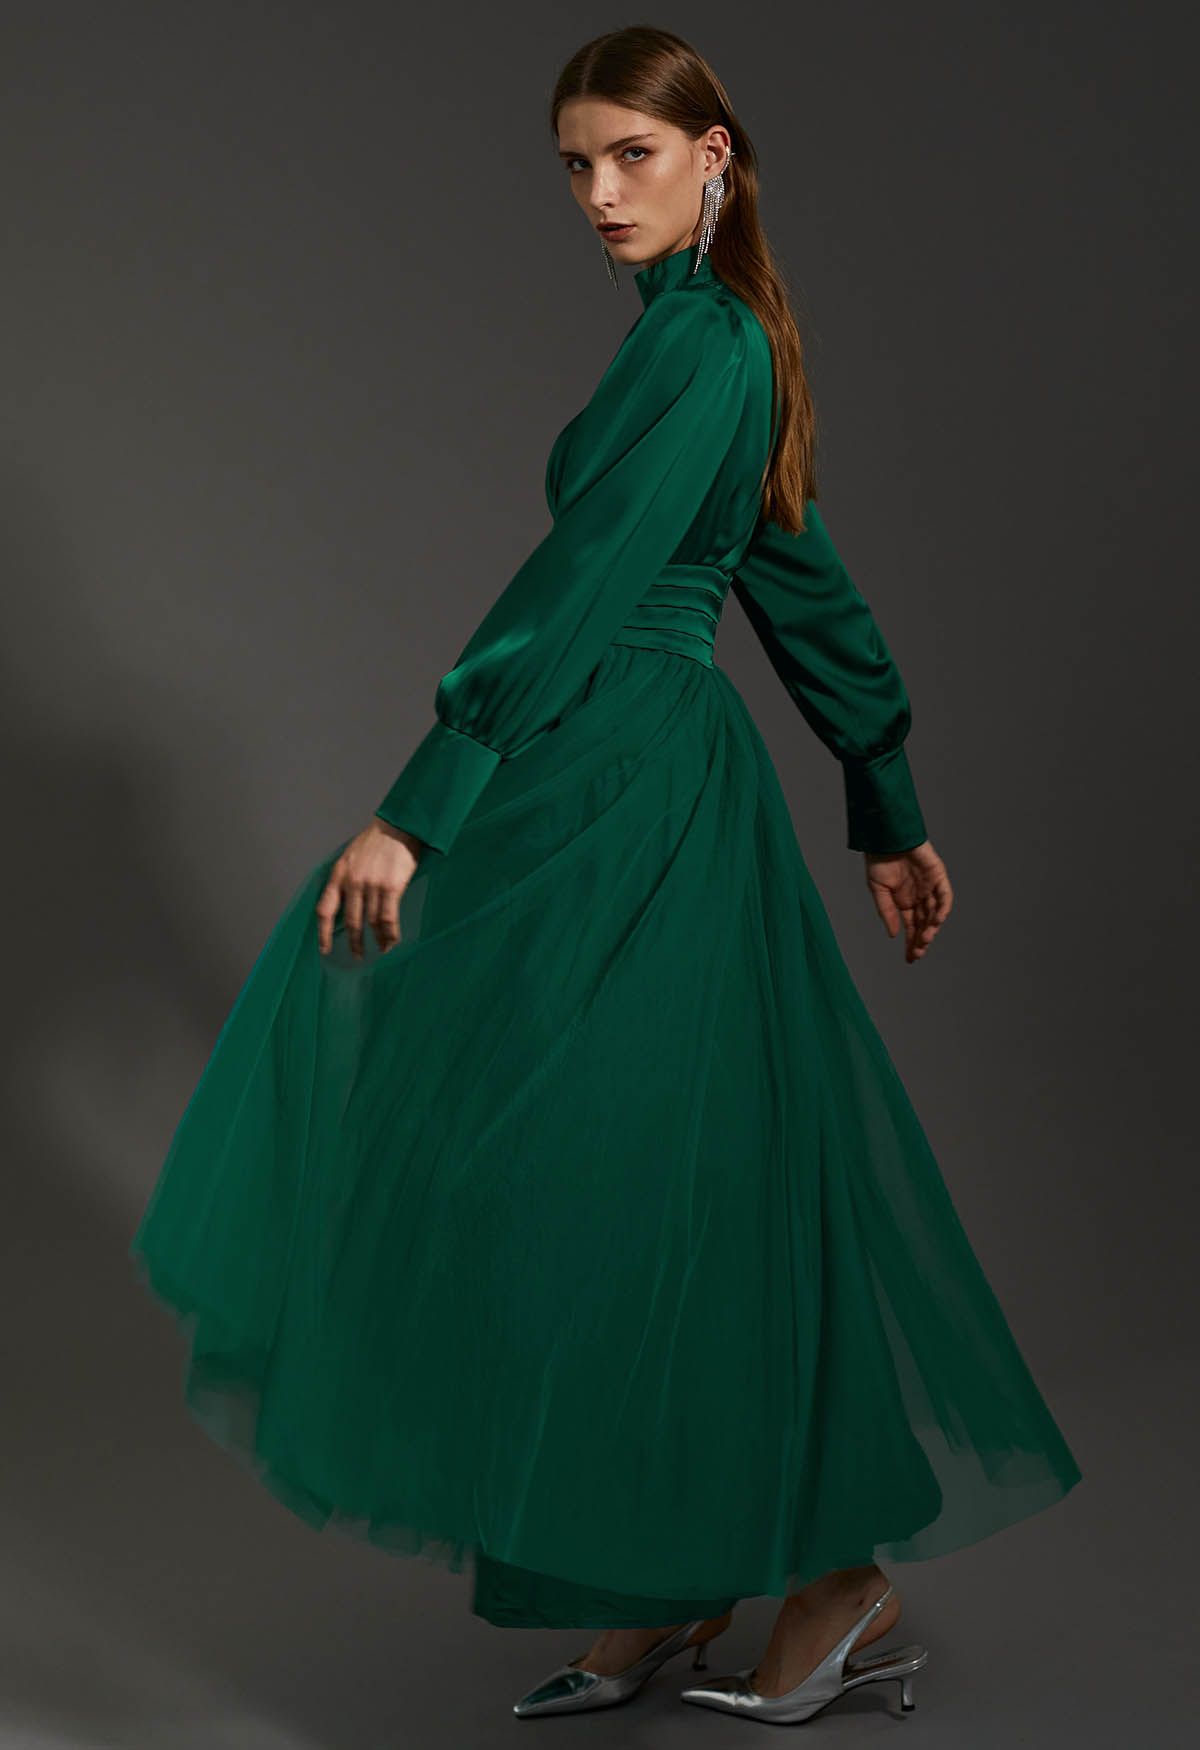 Shine Bright High Neck Tulle Maxi Dress in Emerald